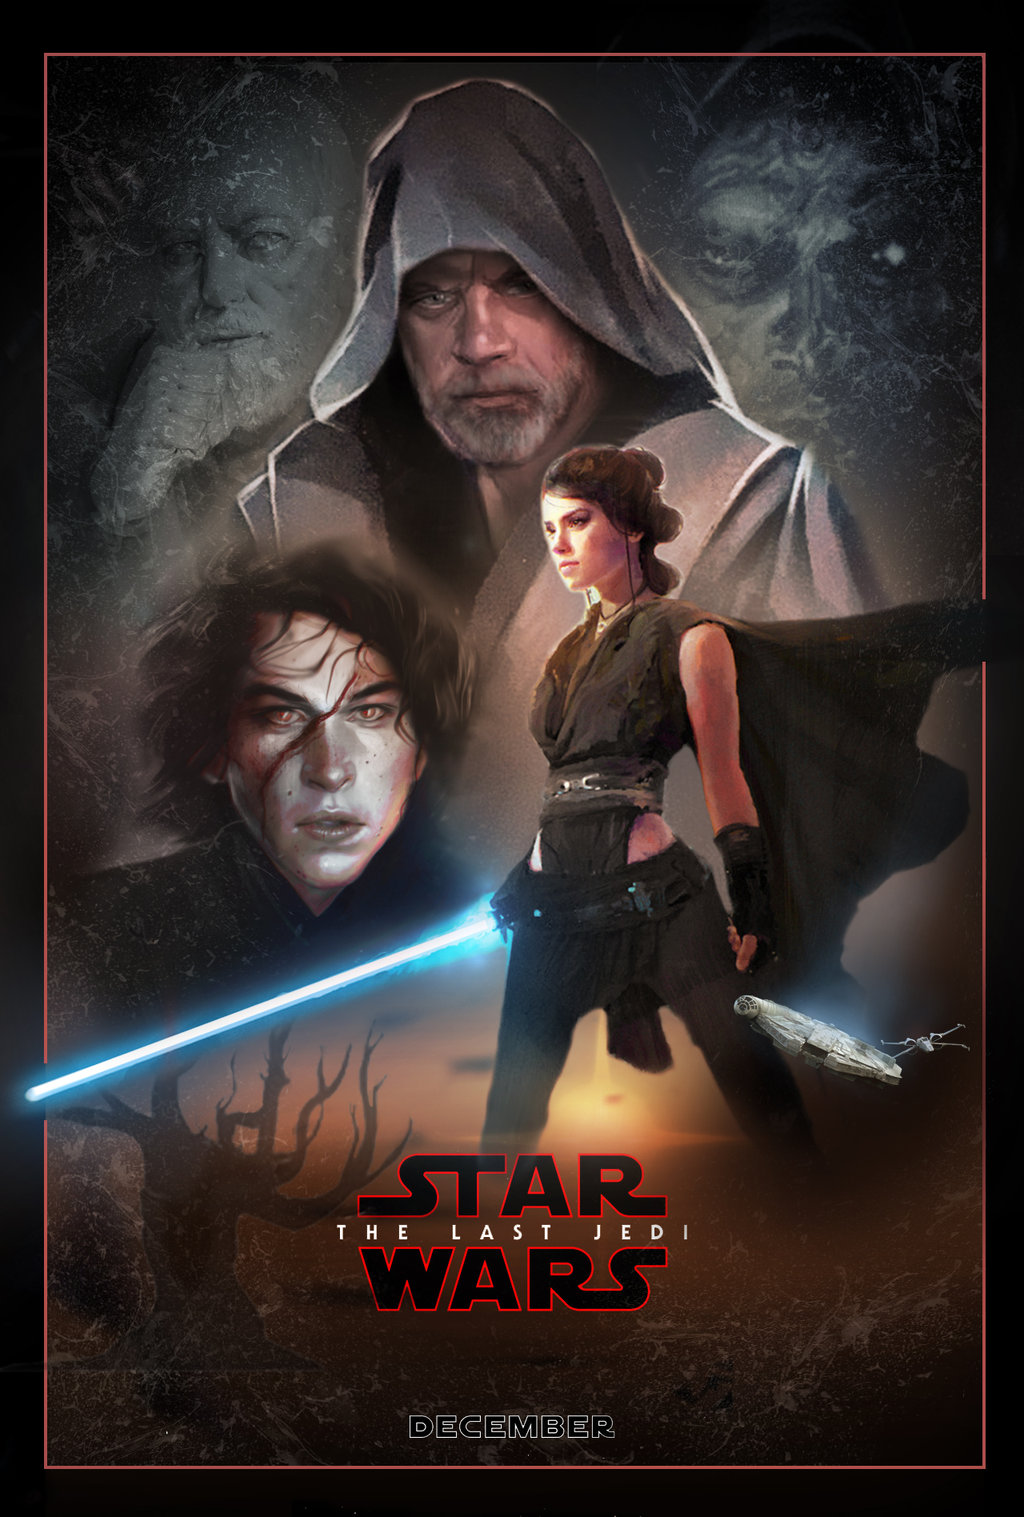 The Last Jedi Poster Wallpaper iPhone resolution 1024x1517